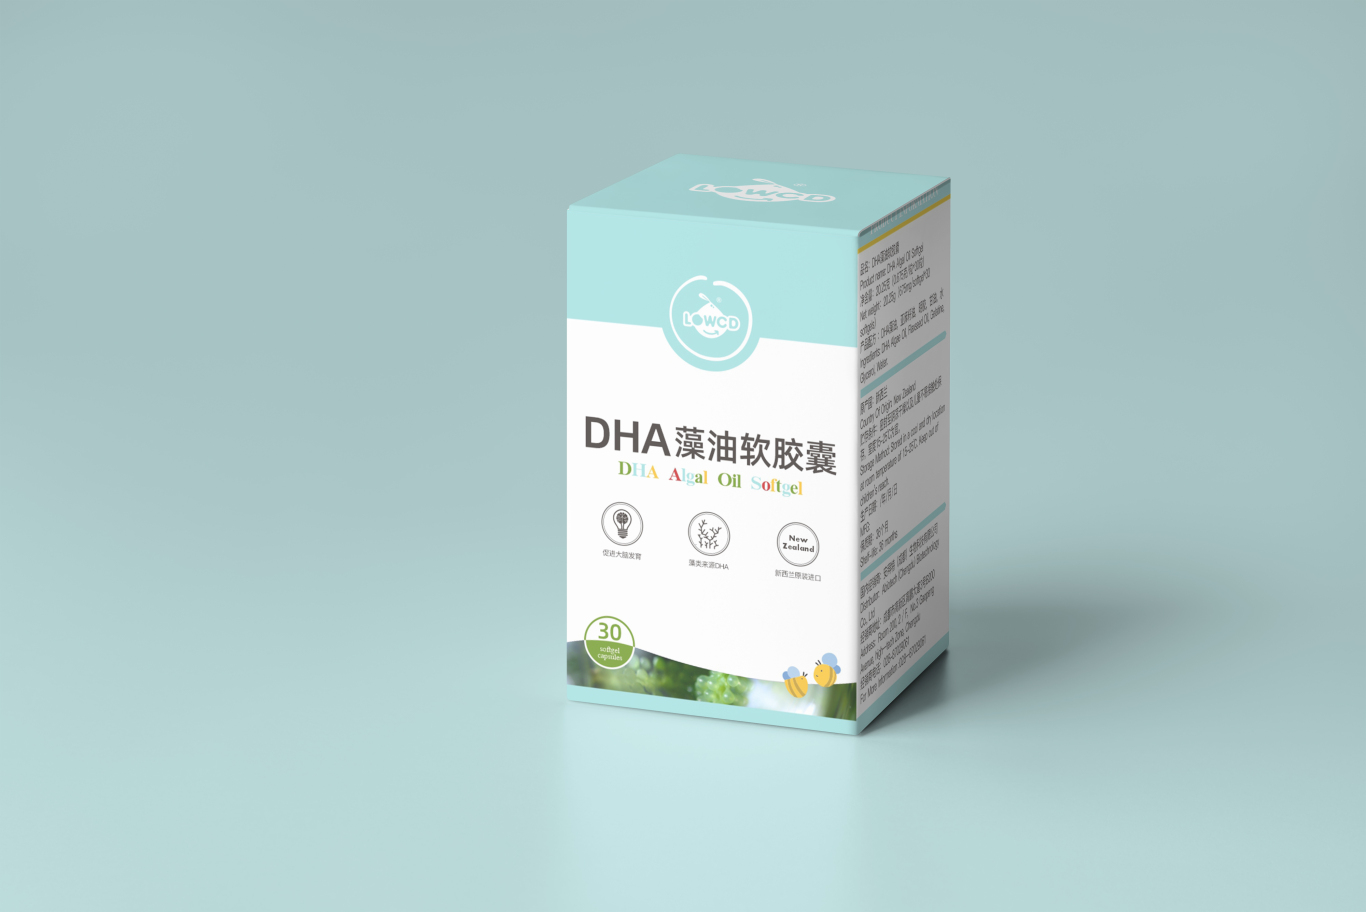 DHA藻油軟膠囊包裝設計圖2